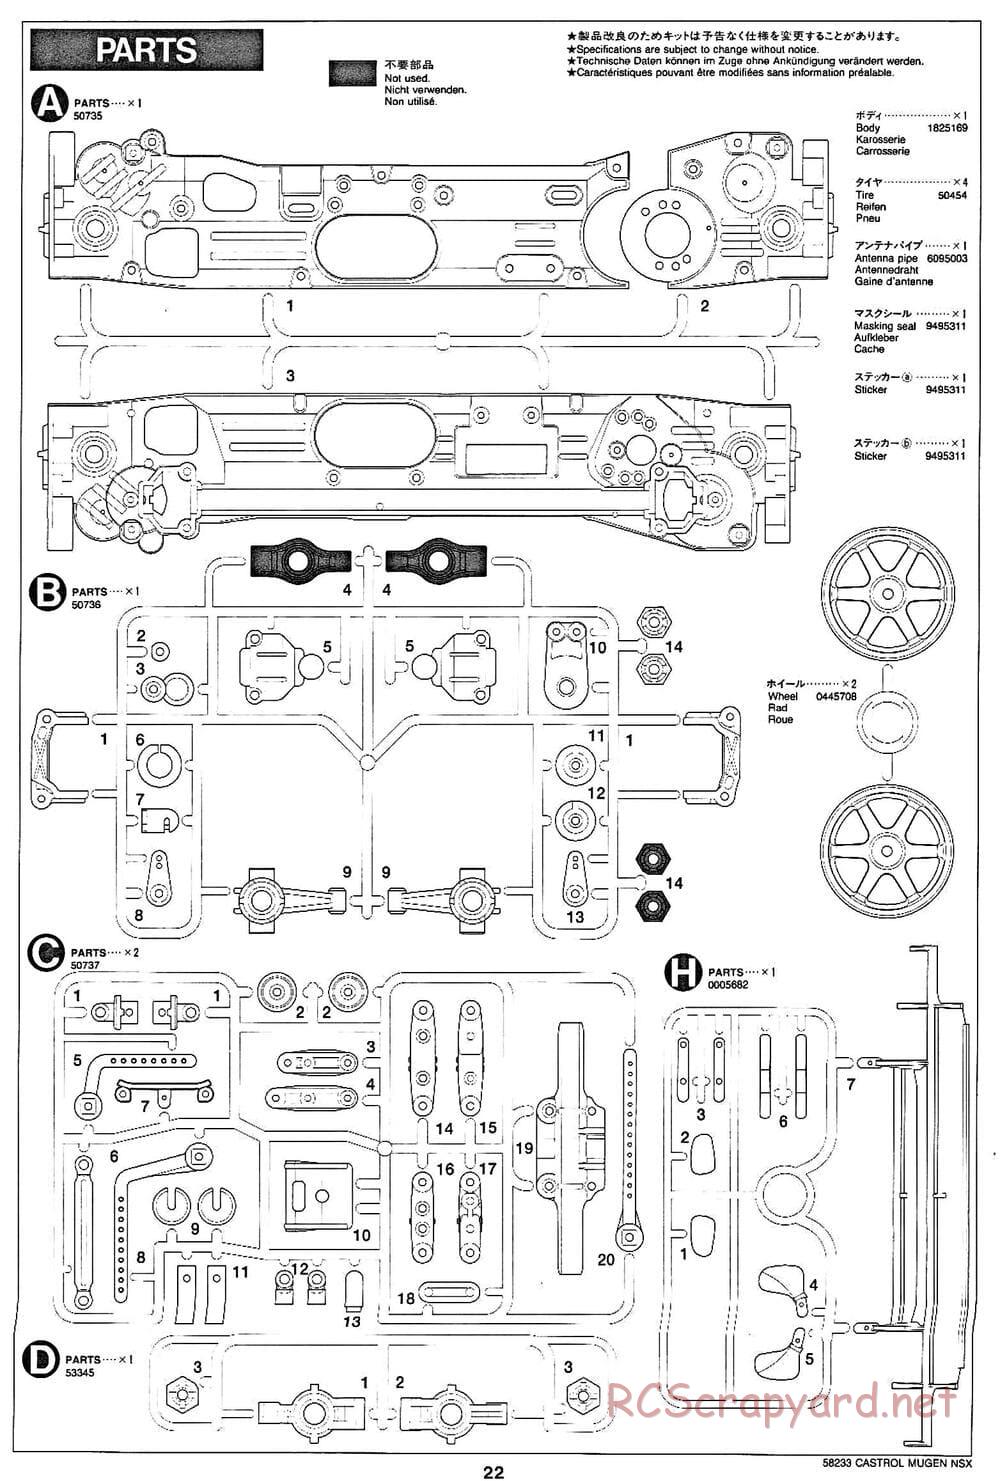 Tamiya - Castrol Mugen NSX - TL-01 Chassis - Manual - Page 22